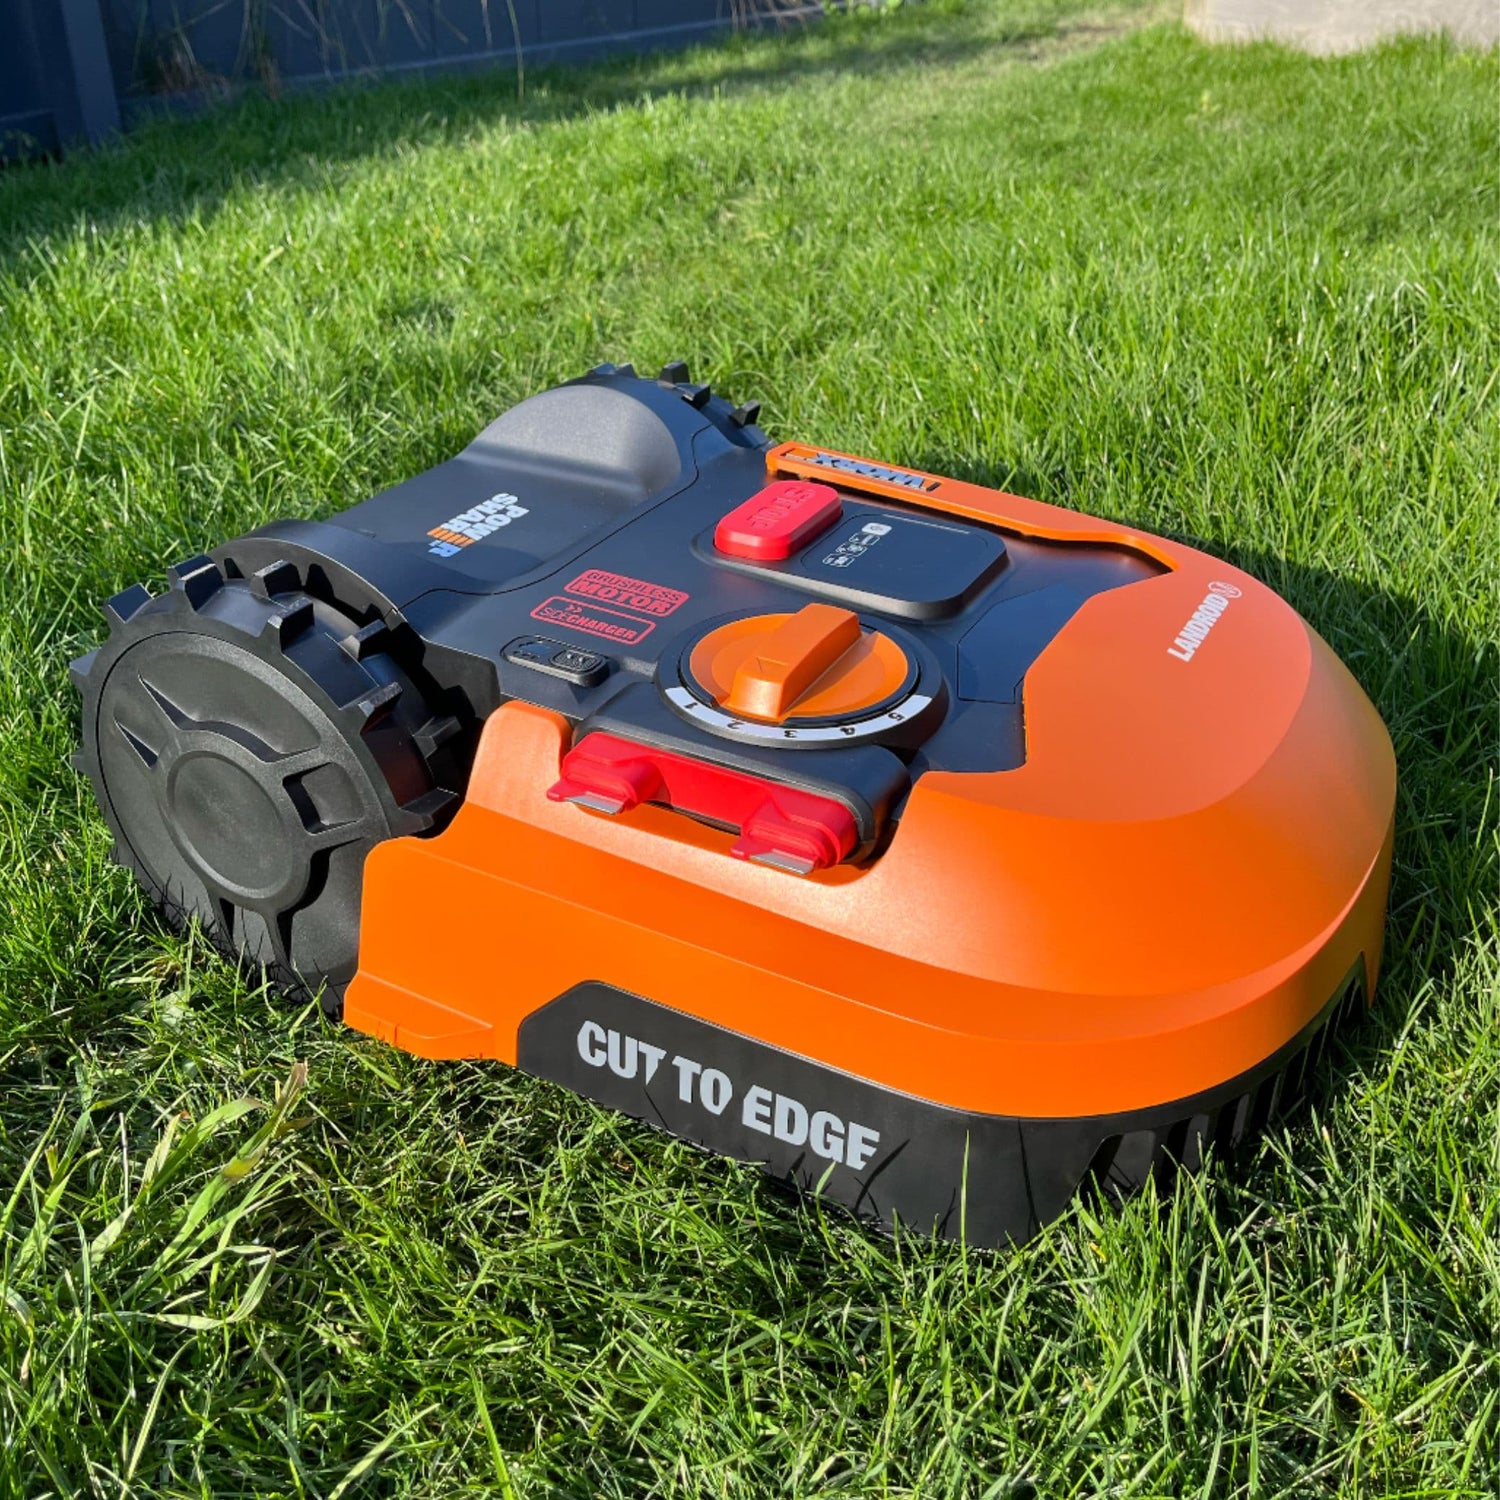 Wired Robot Lawn Mower